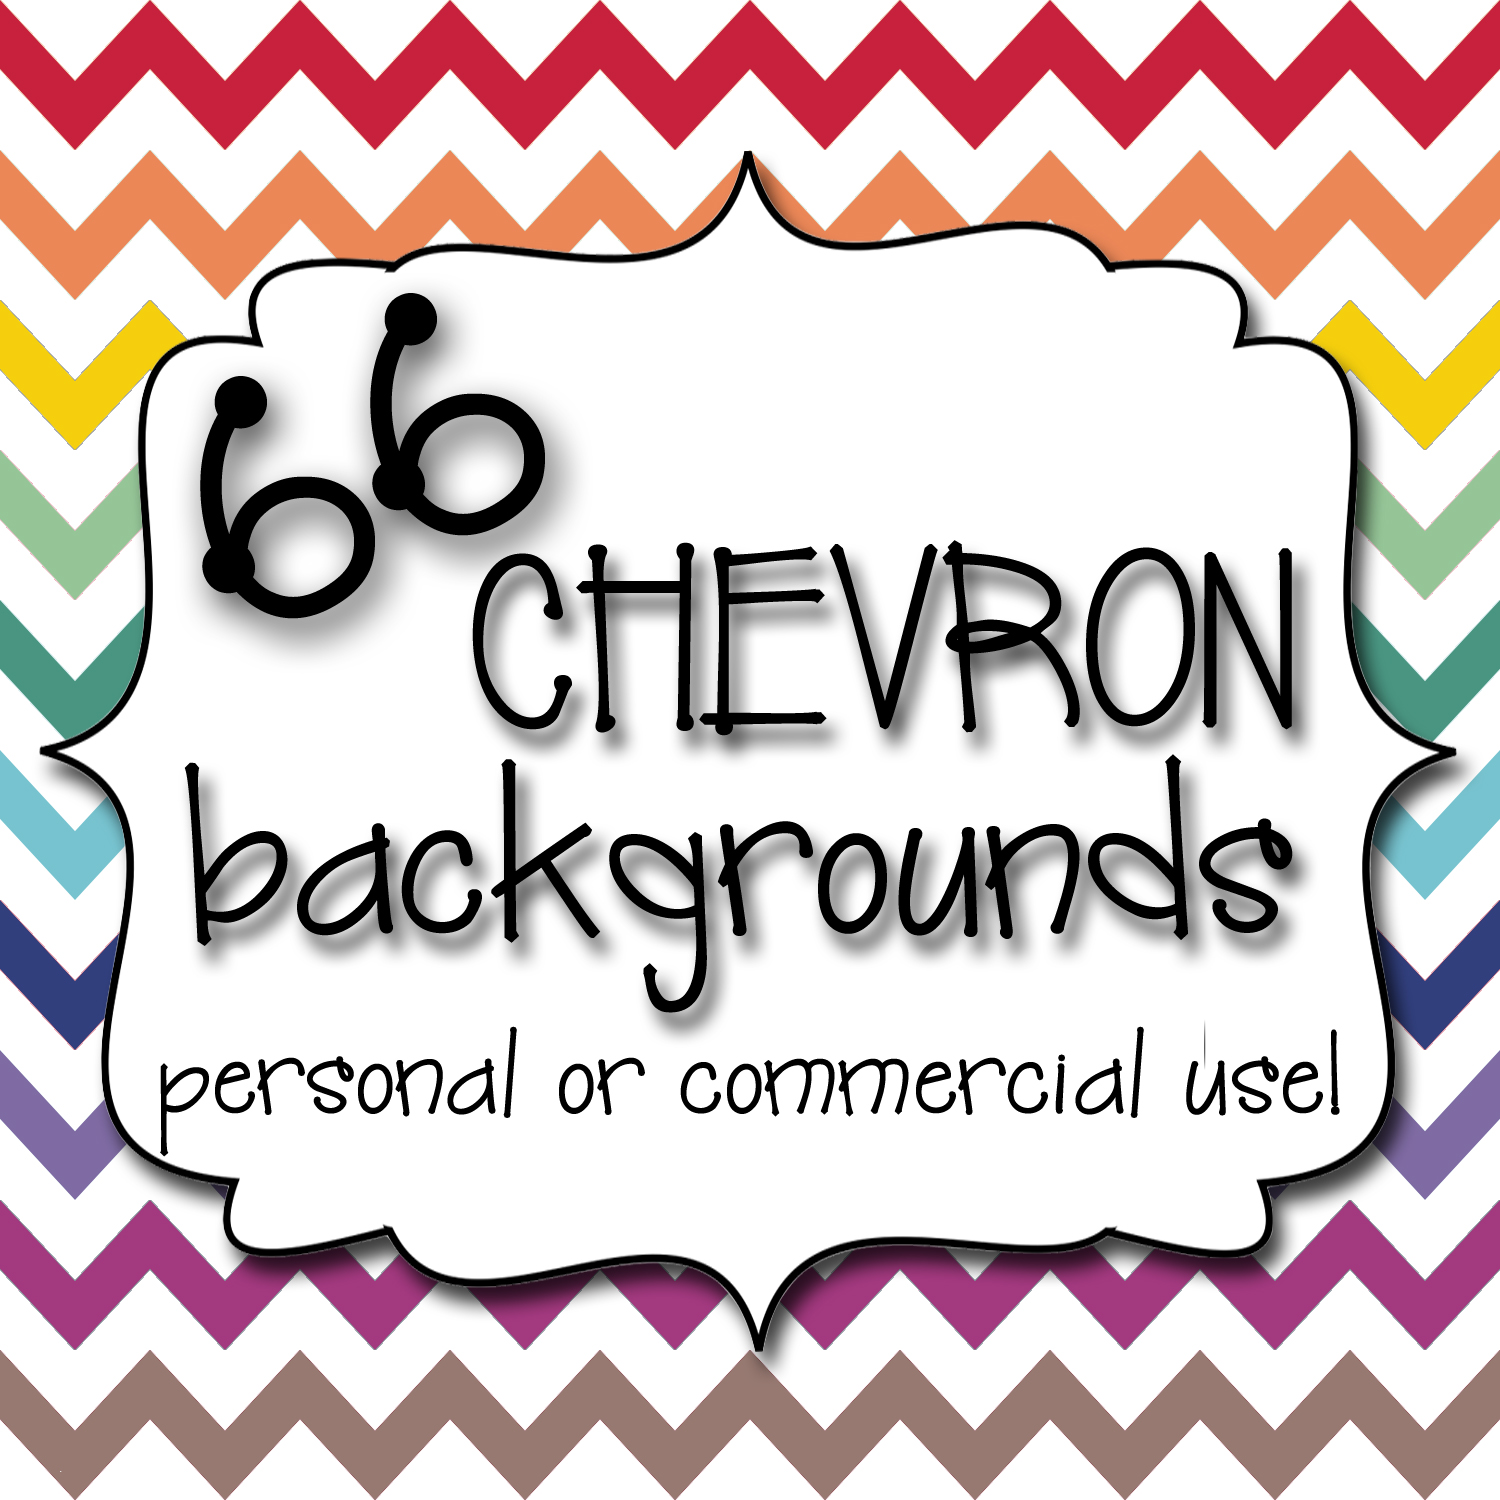 Chevron Backgrounds